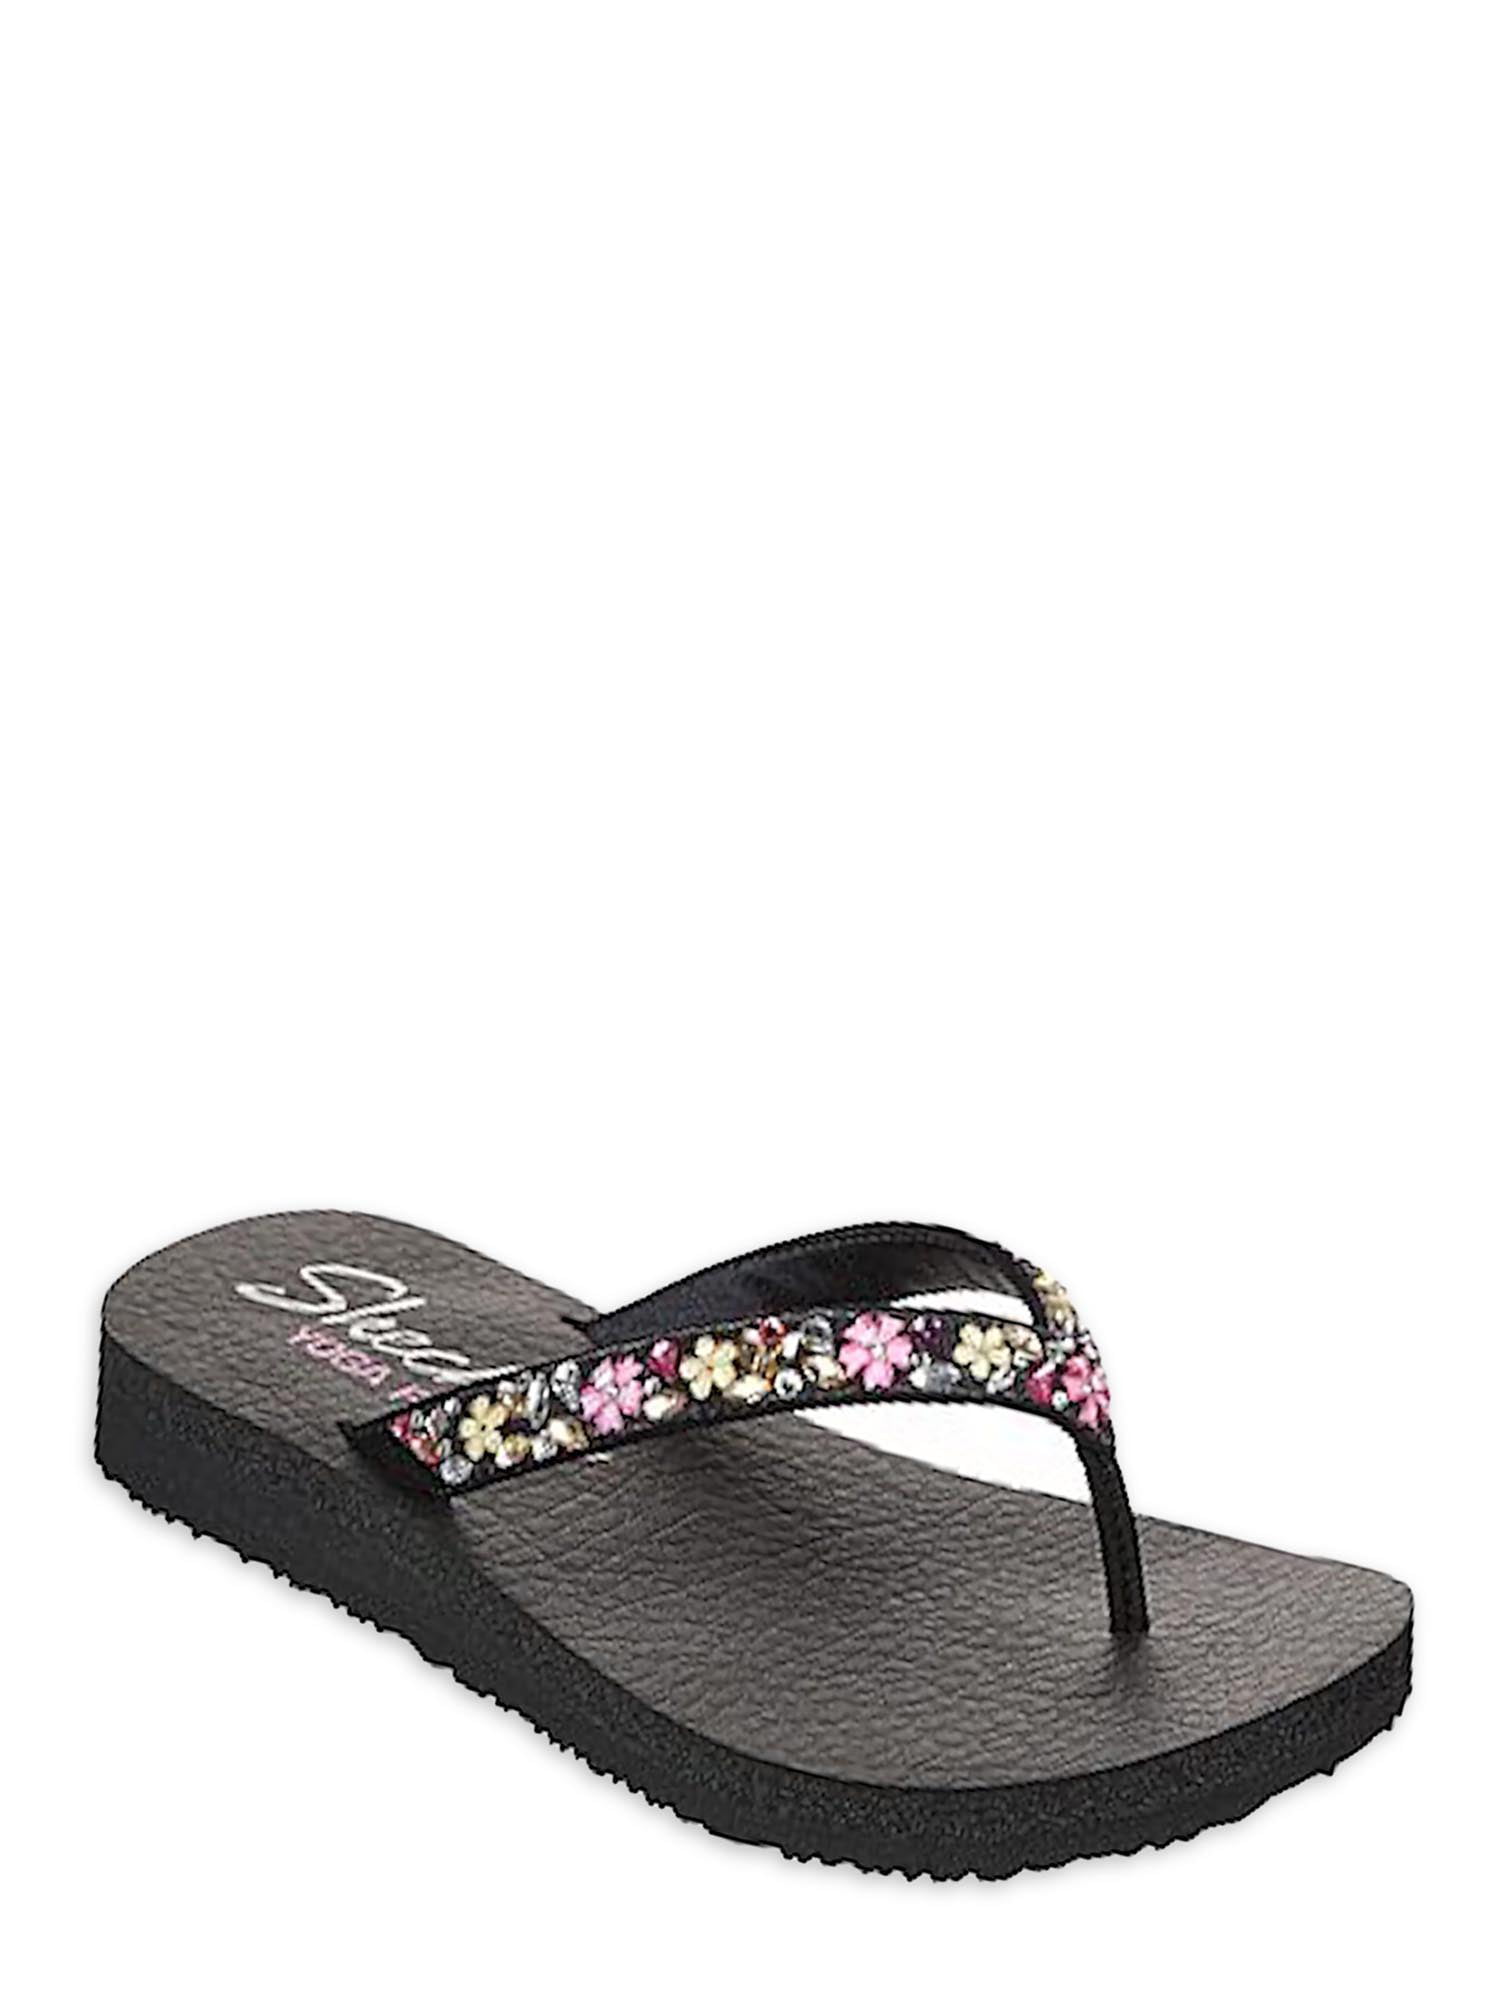 Skechers Meditation Daisy Garden Flip Flop Sandal (Women's) - Walmart.com